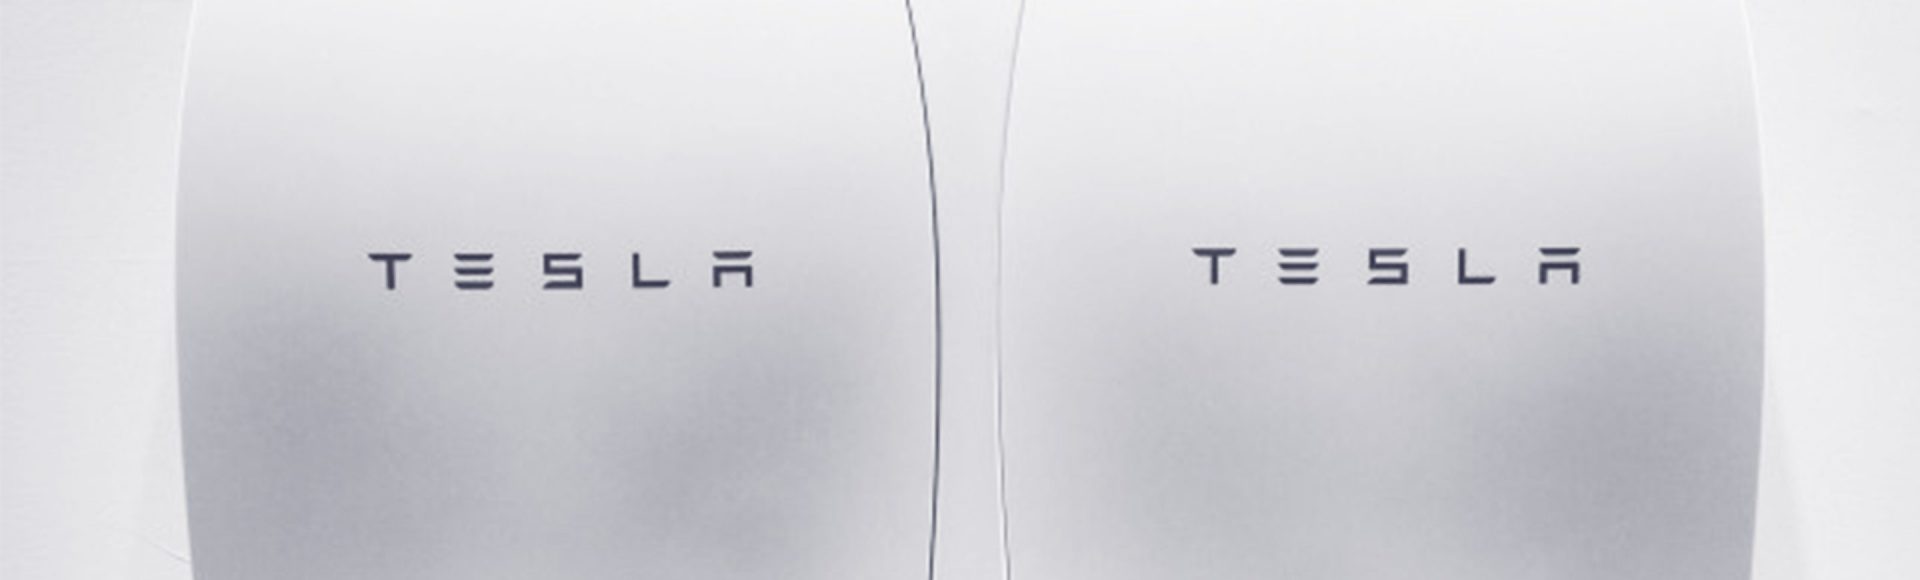 ARK-Invest_Blog-Banner_2014_11_14---Tesla-Battery